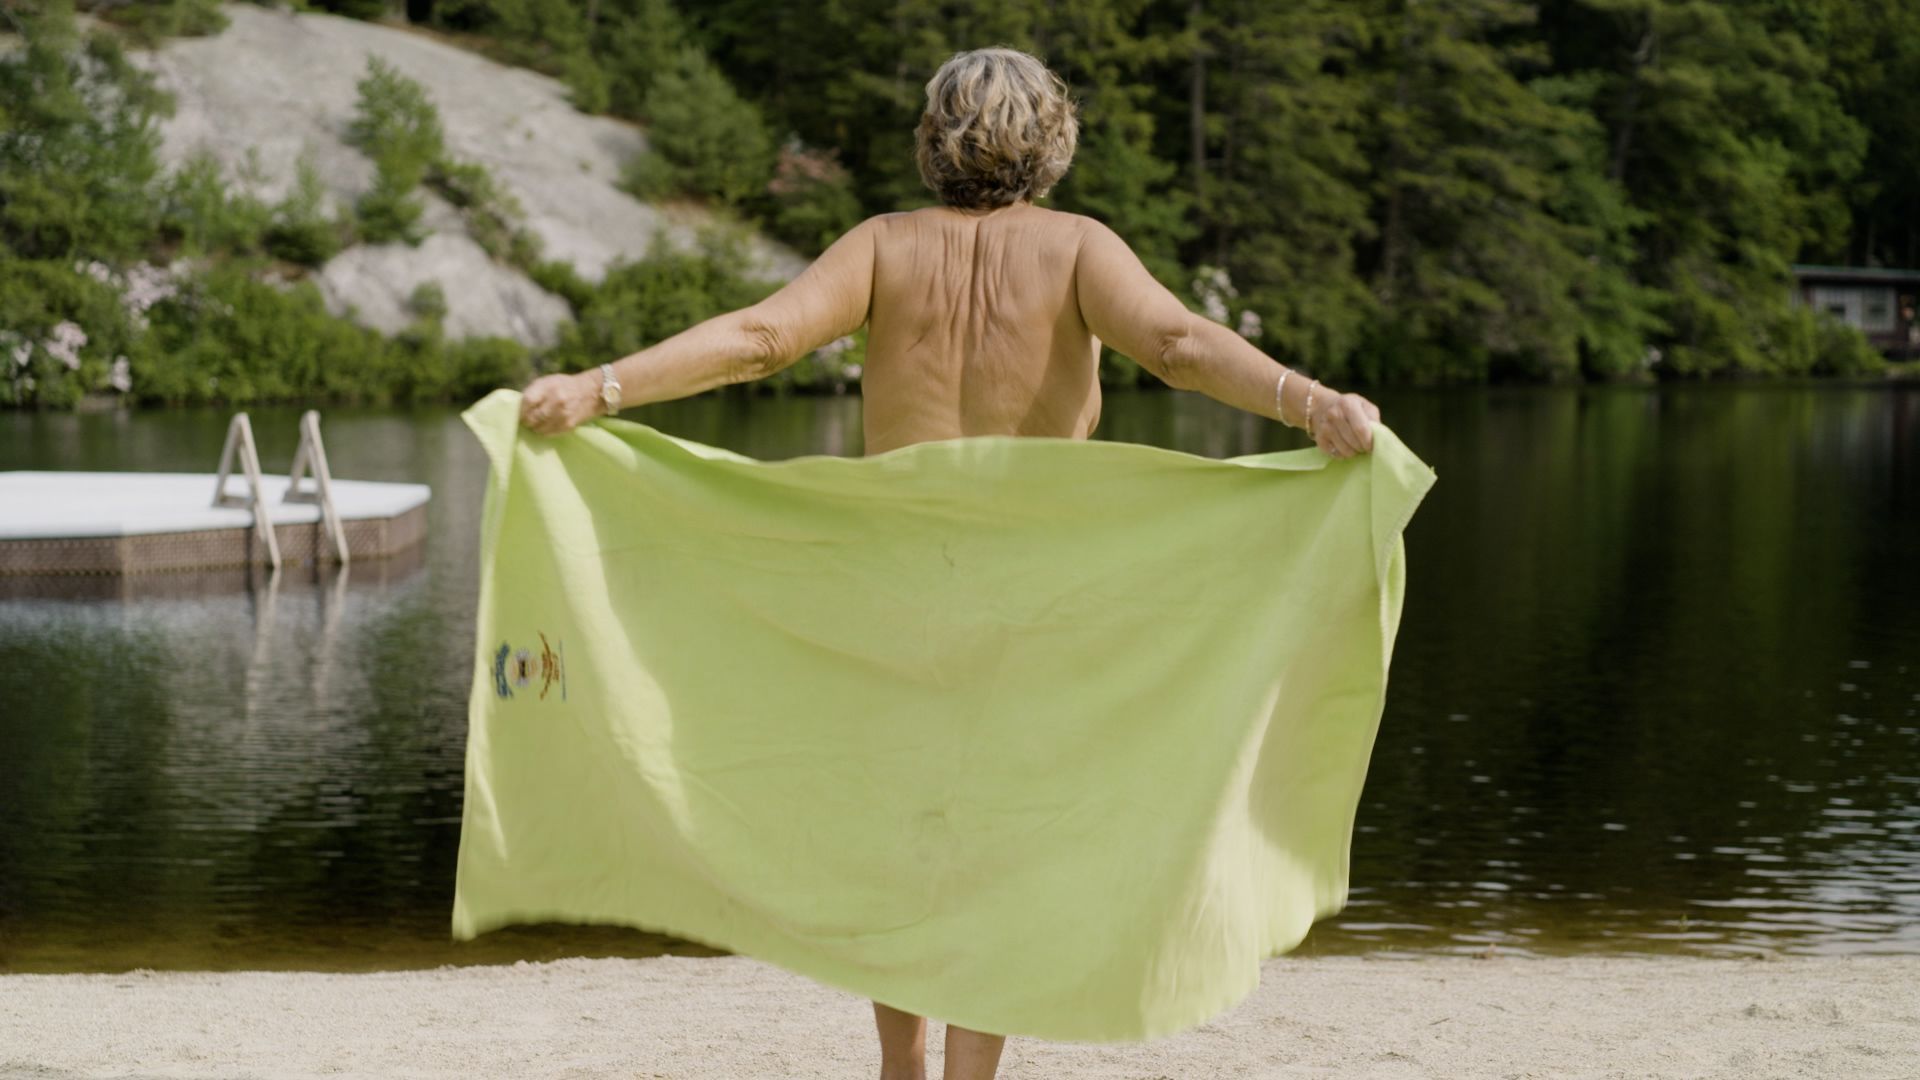 Best of New nude beach video